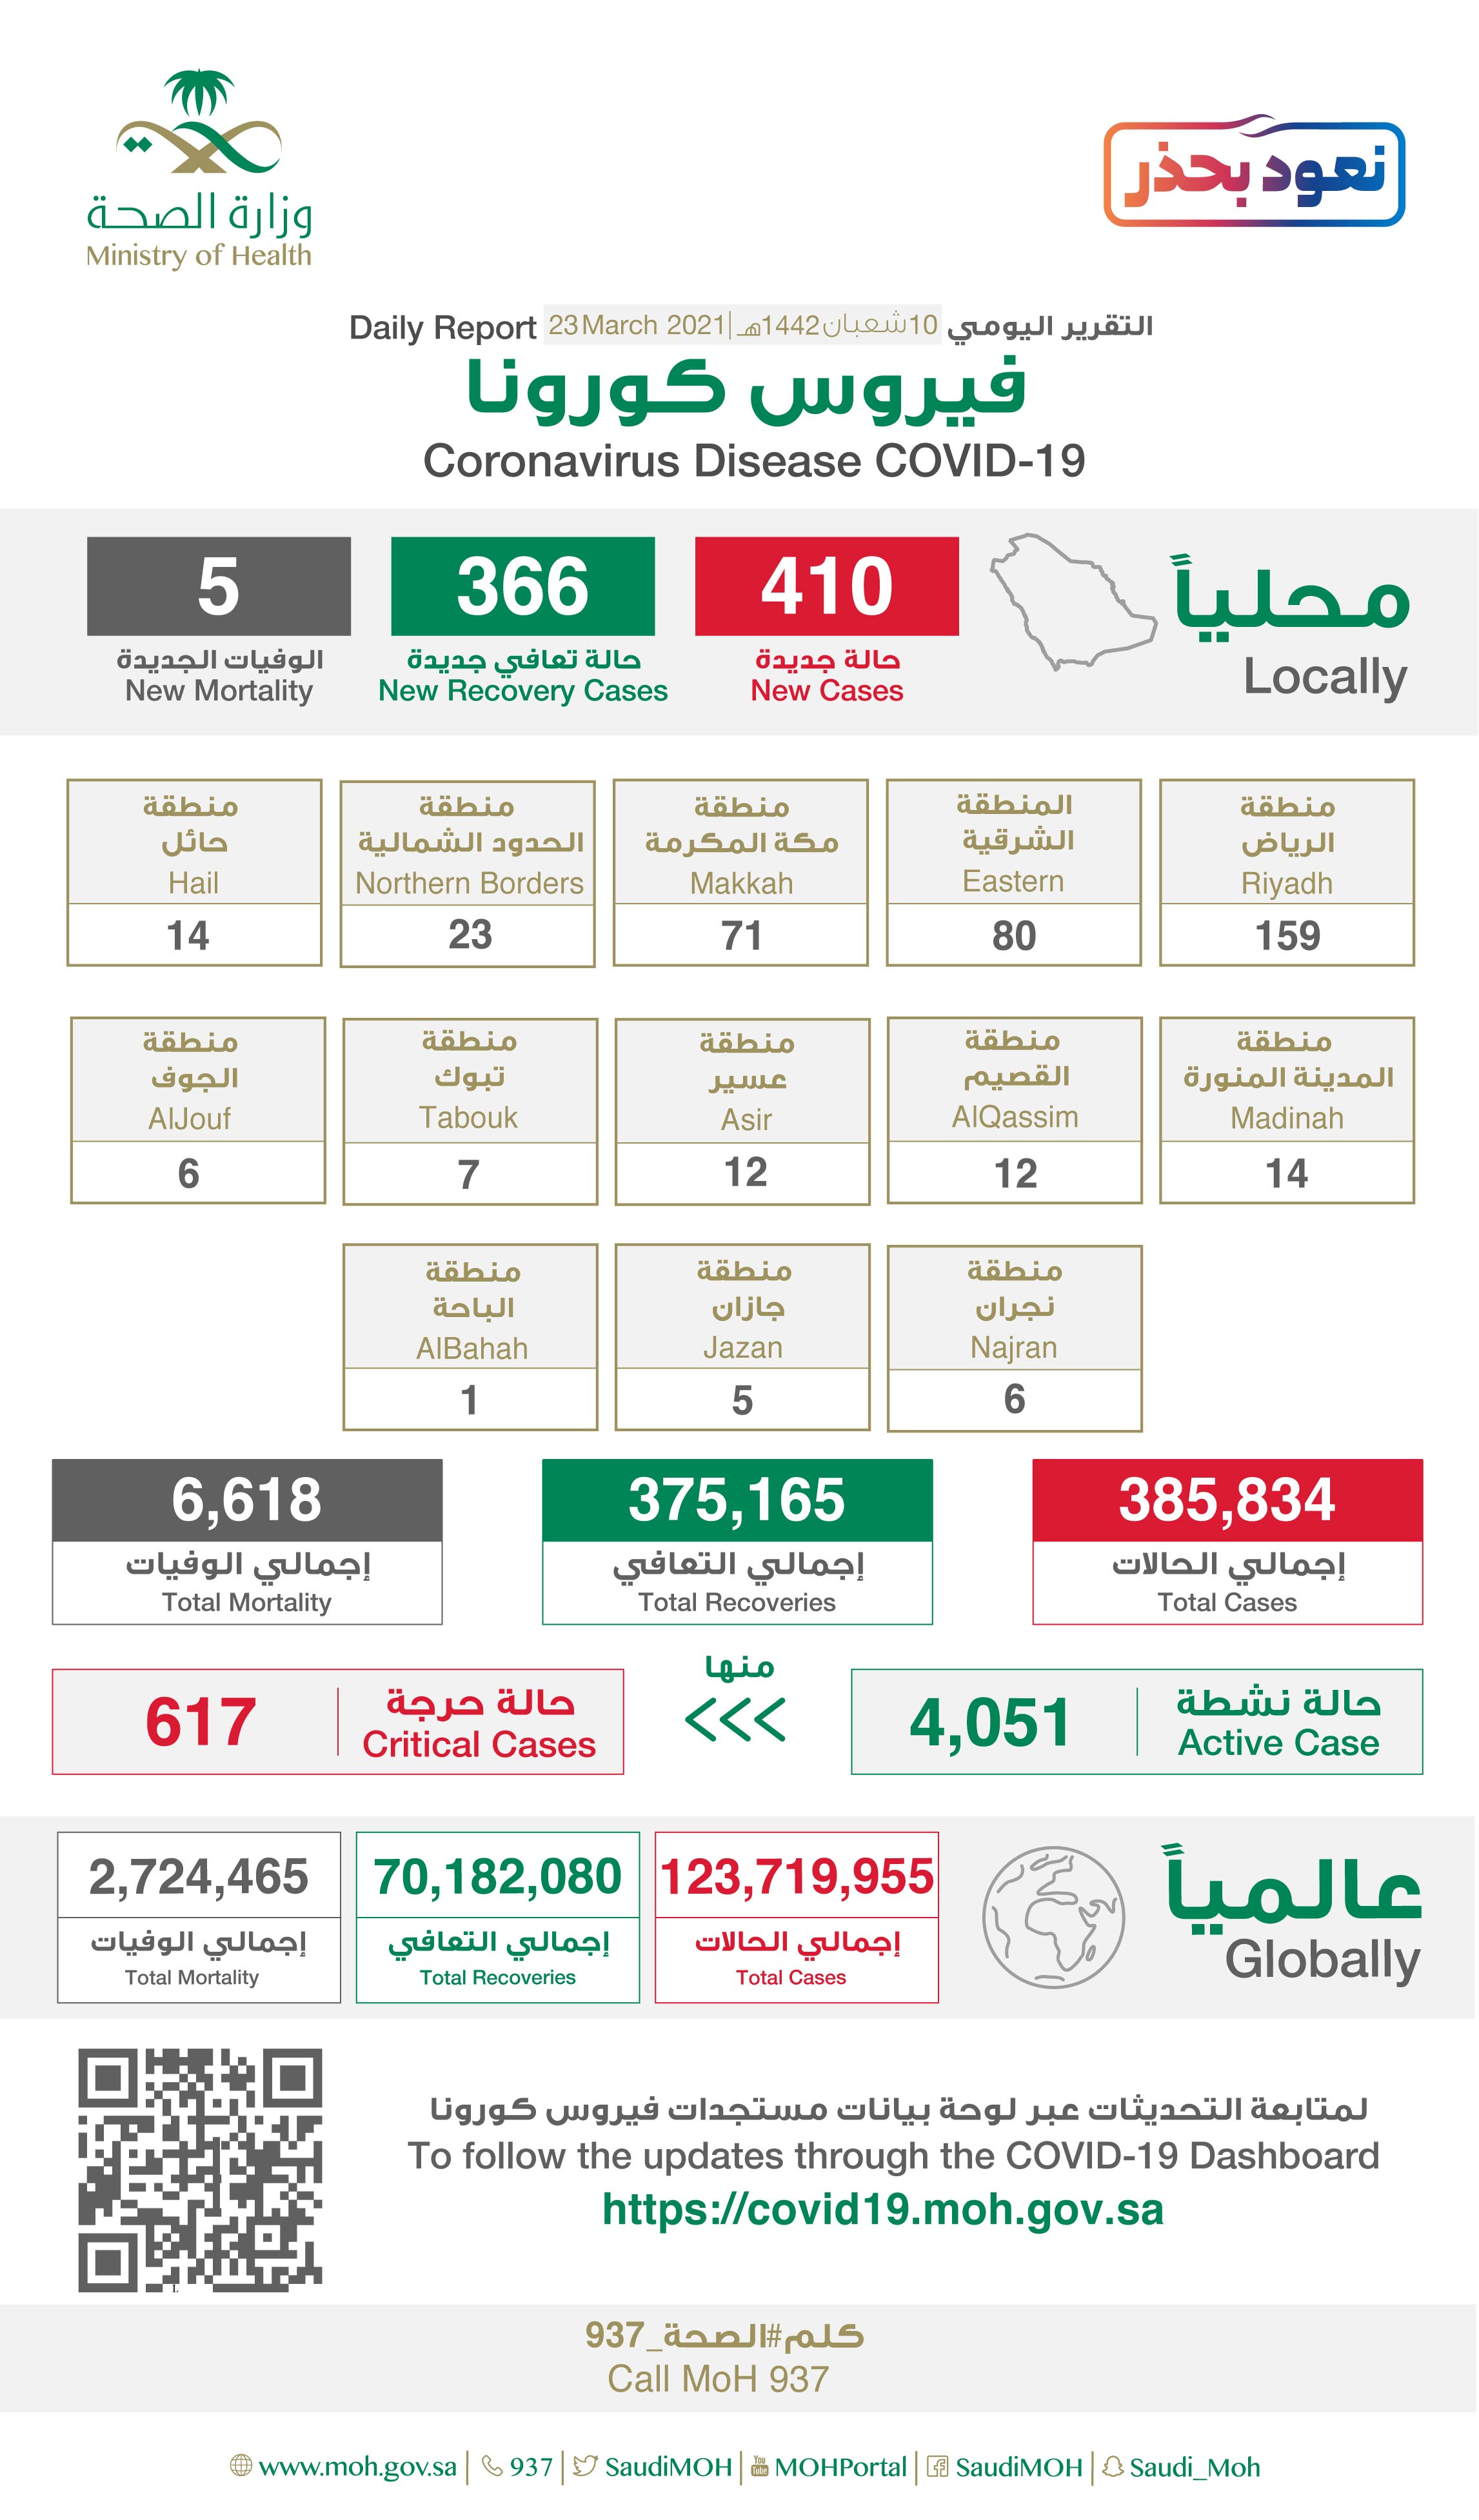 Saudi Arabia Coronavirus : Total Cases :385,834 , New Cases : 410, Cured : 375,165 , Deaths: 6,618, Active Cases : 4,051